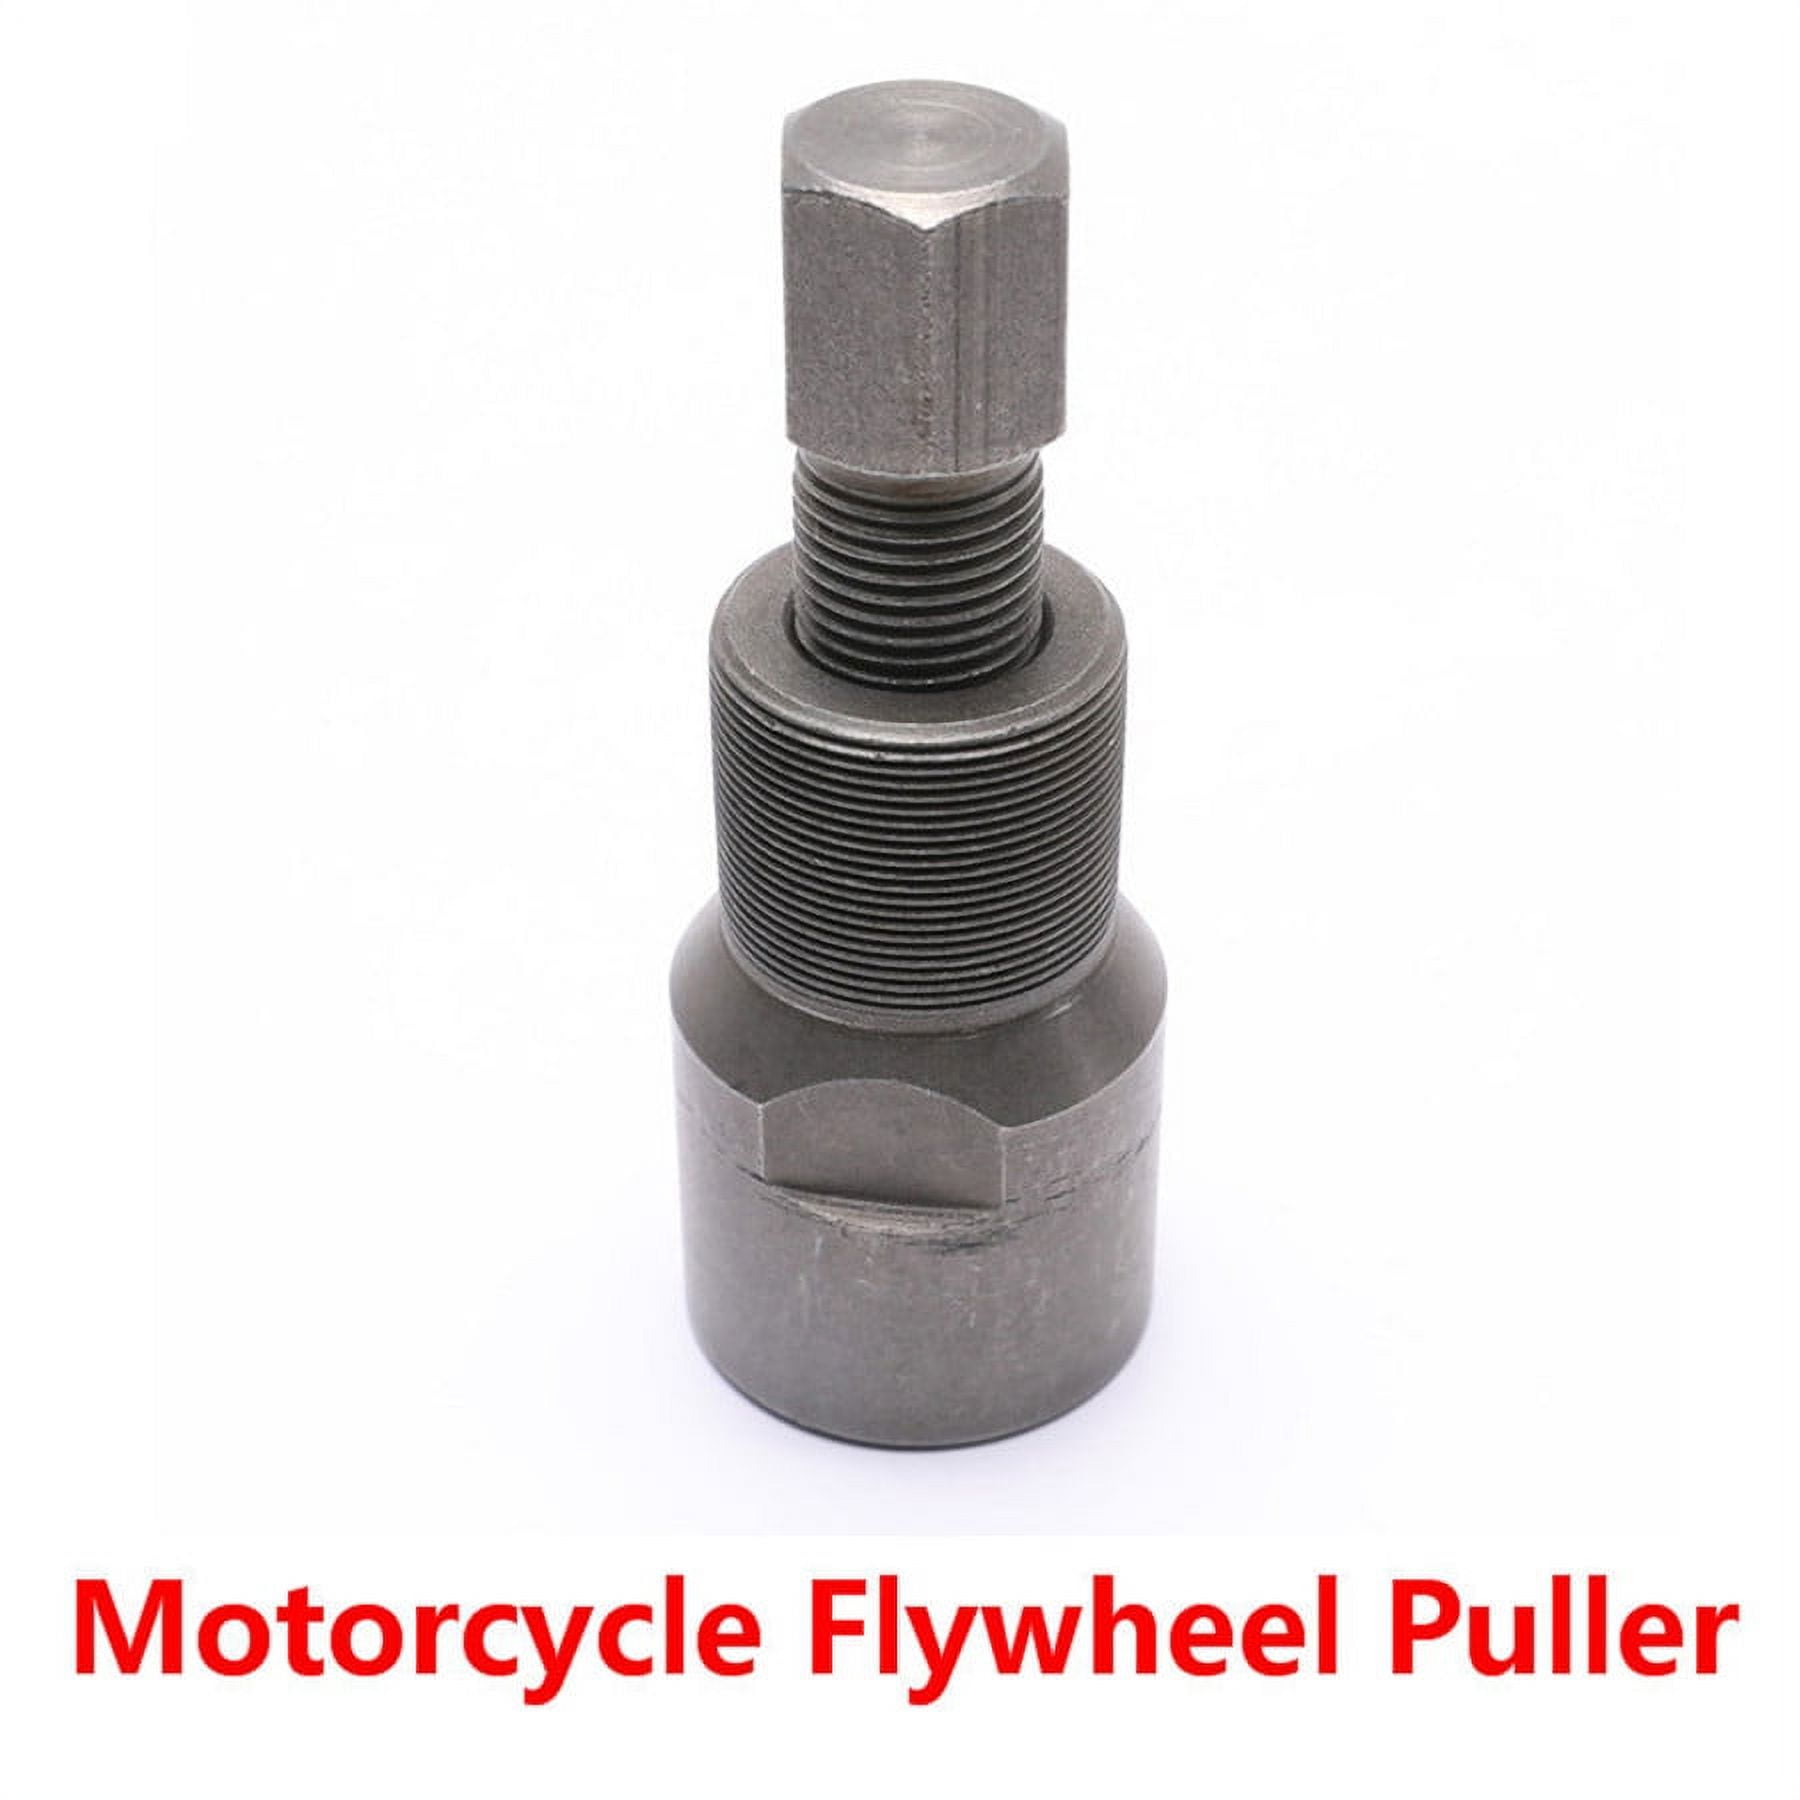 Flywheel Puller M27x1,25 right hand thread